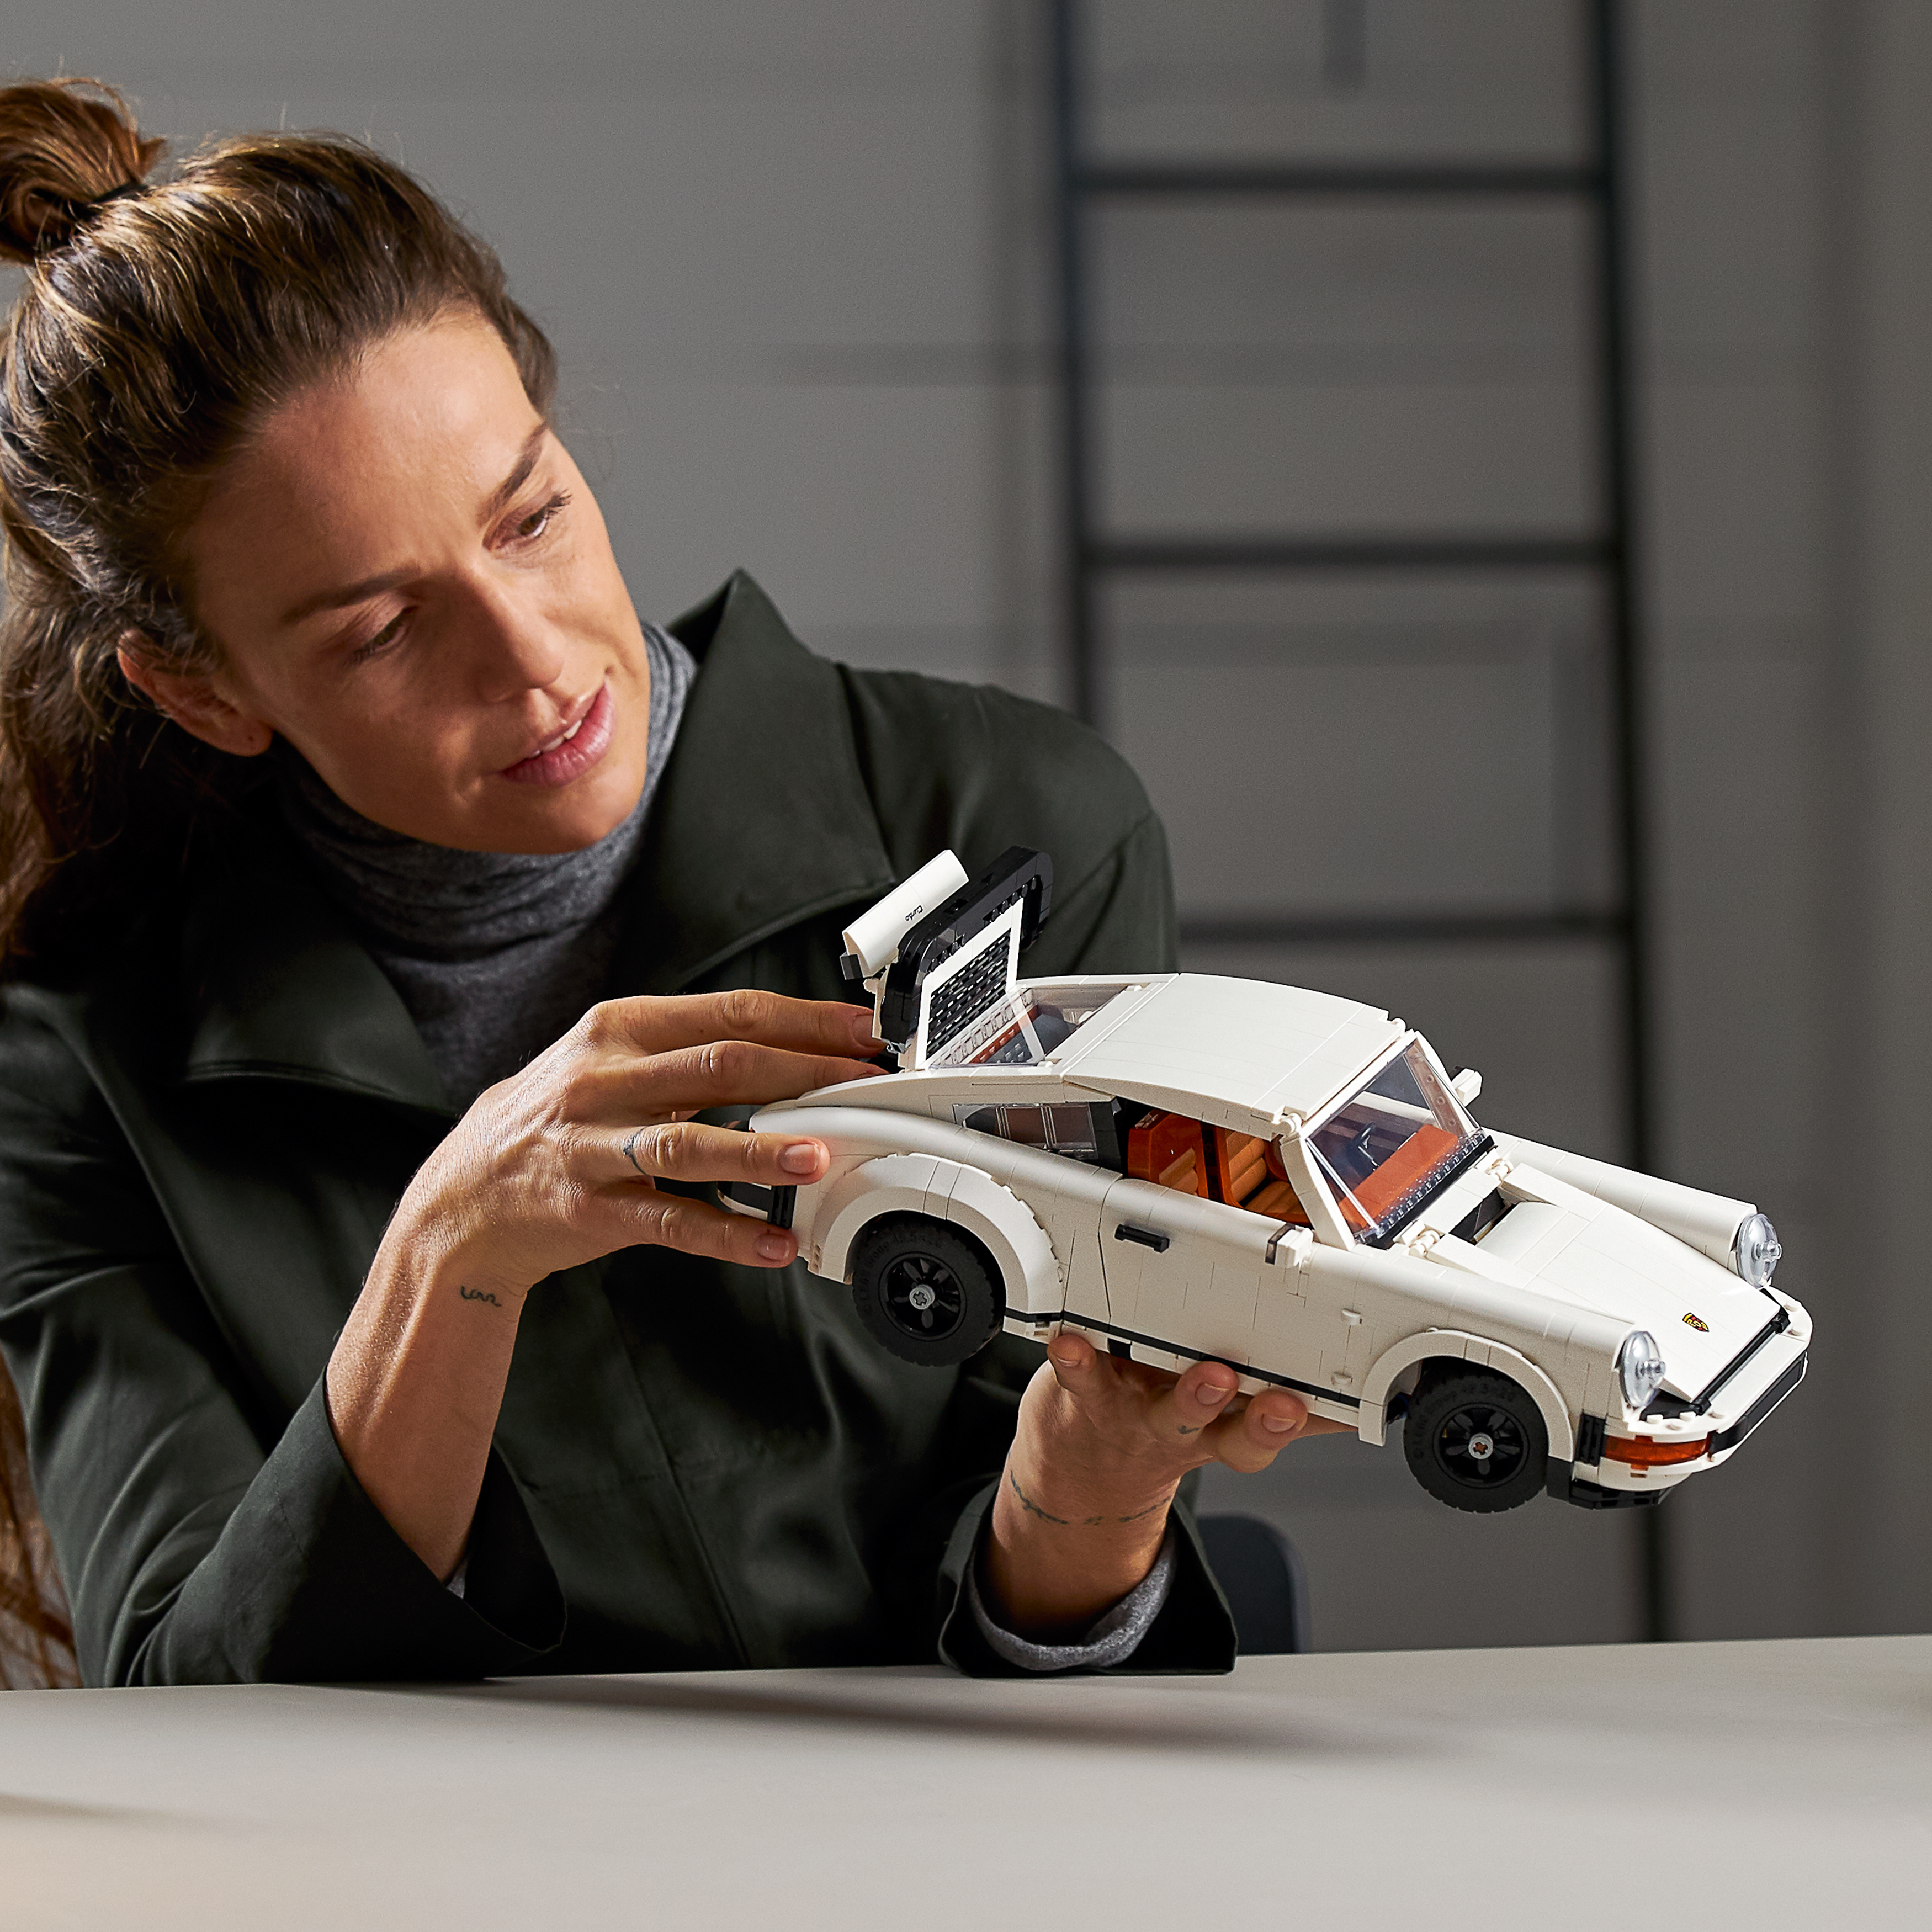 Porsche engineering expertise as Lego Technic model - Porsche Newsroom